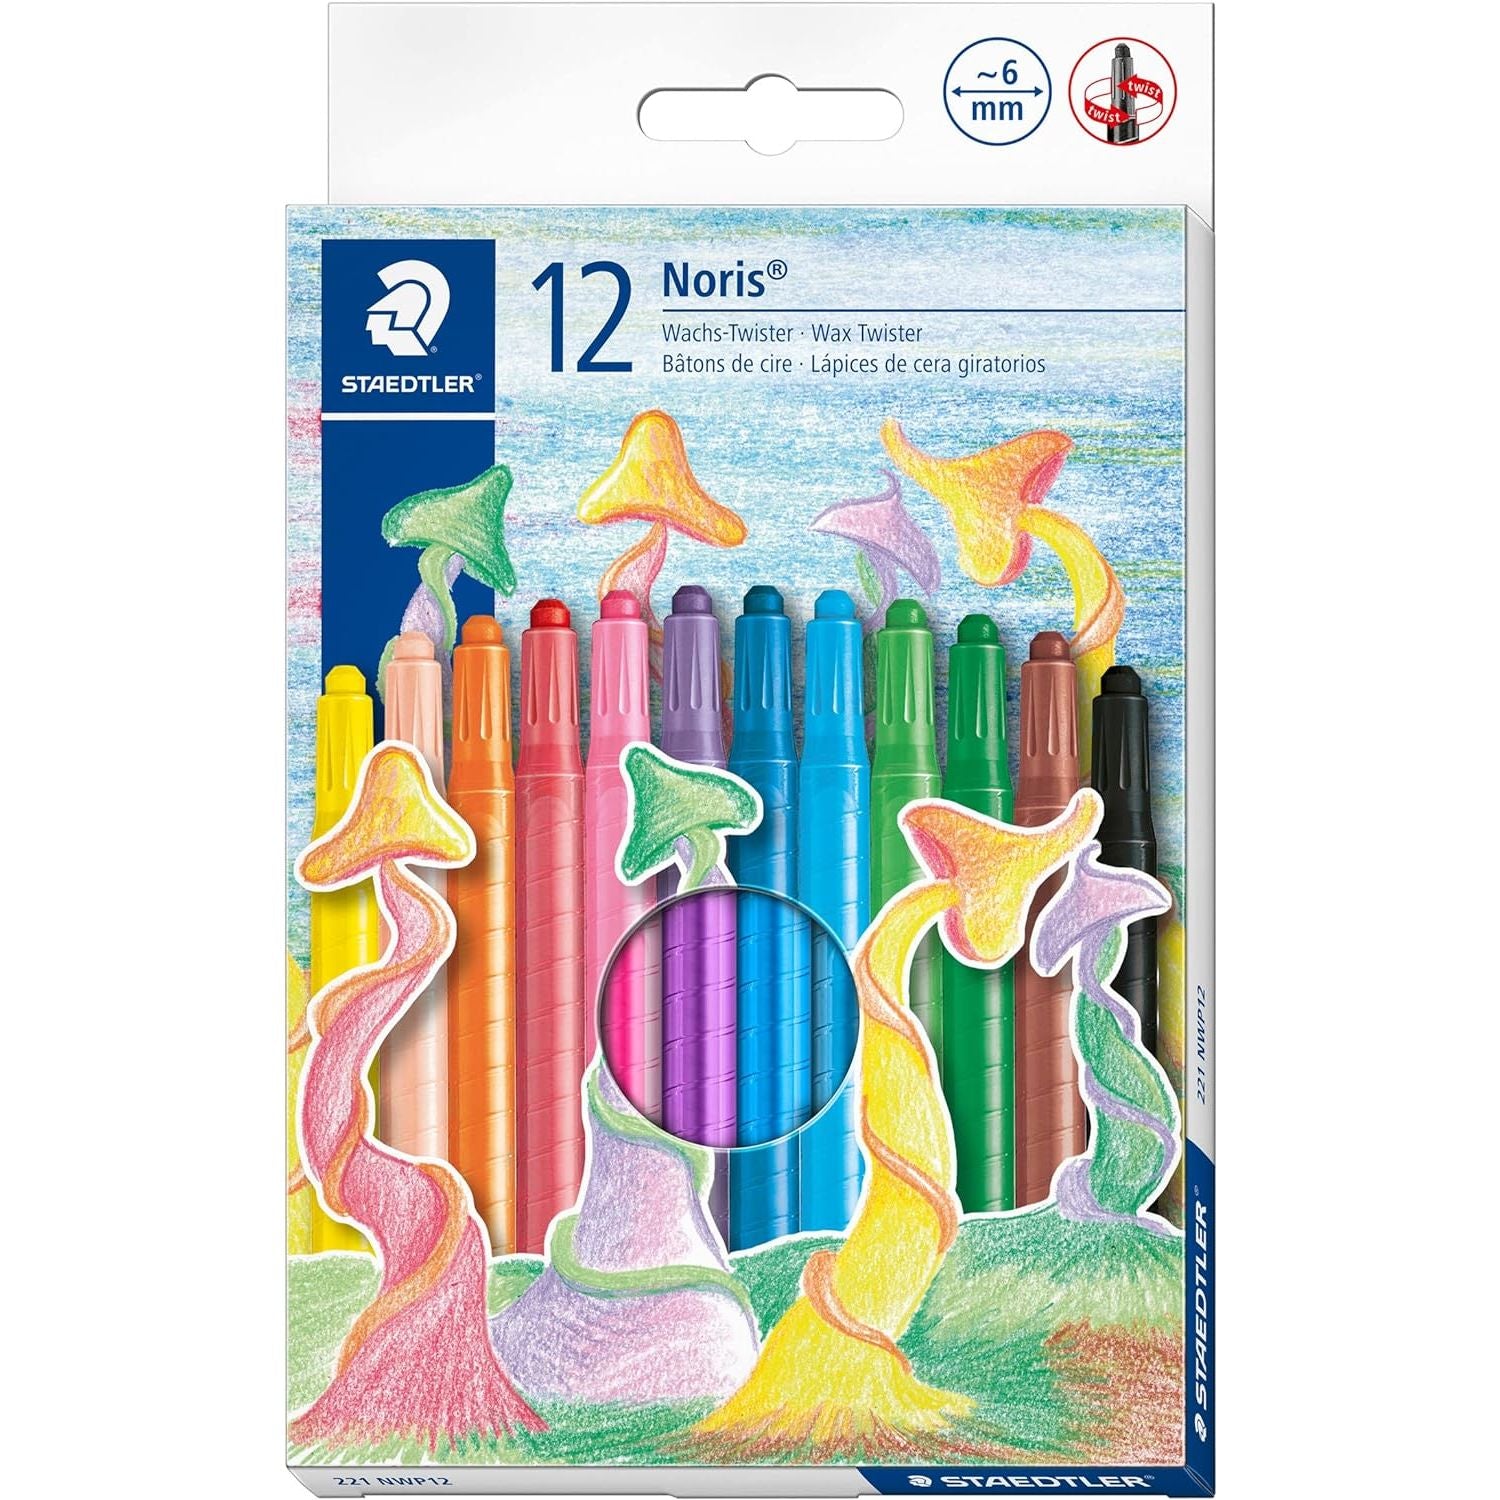 Staedtler noris 221 nwp12 wax crayons - pack of 12